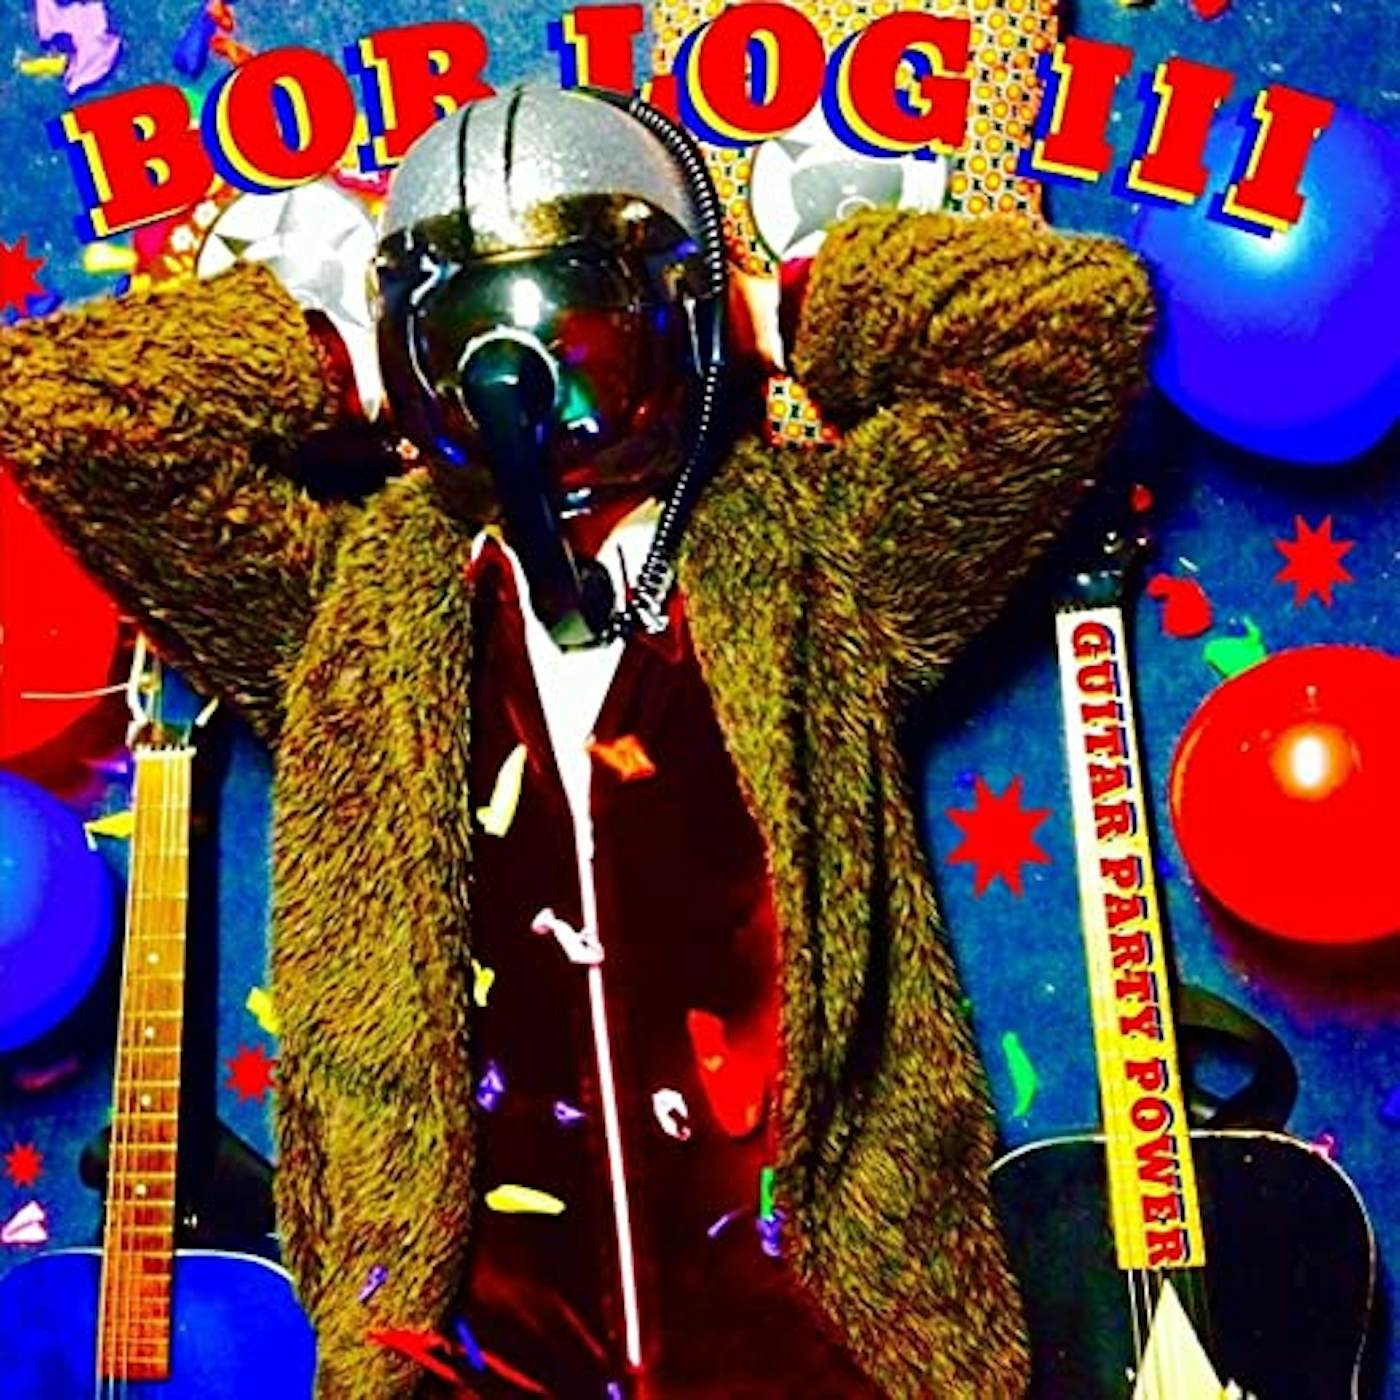 Bob Log III Guitar Party Power (Import) vinyl record